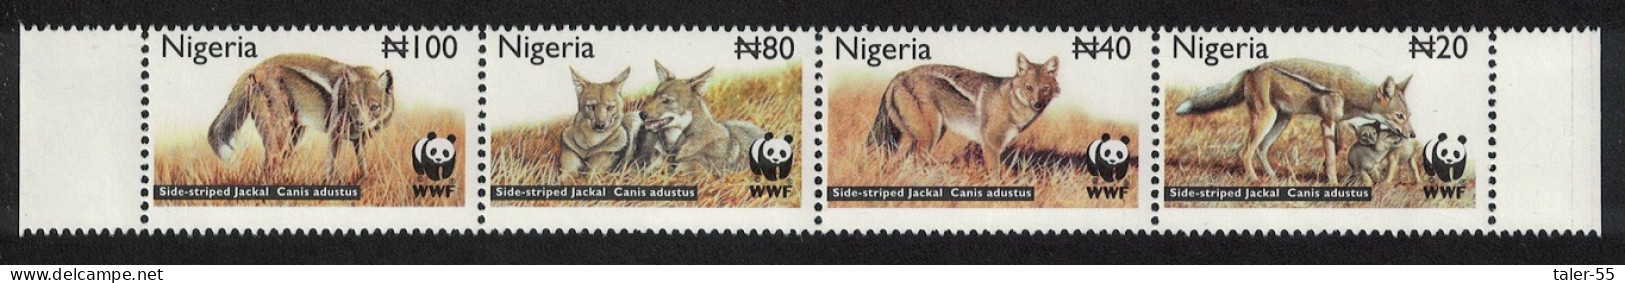 Nigeria WWF Side-striped Jackal Strip Of 4v 2003 MNH SG#809-812 MI#762-765 Sc#759-762 - Nigeria (1961-...)